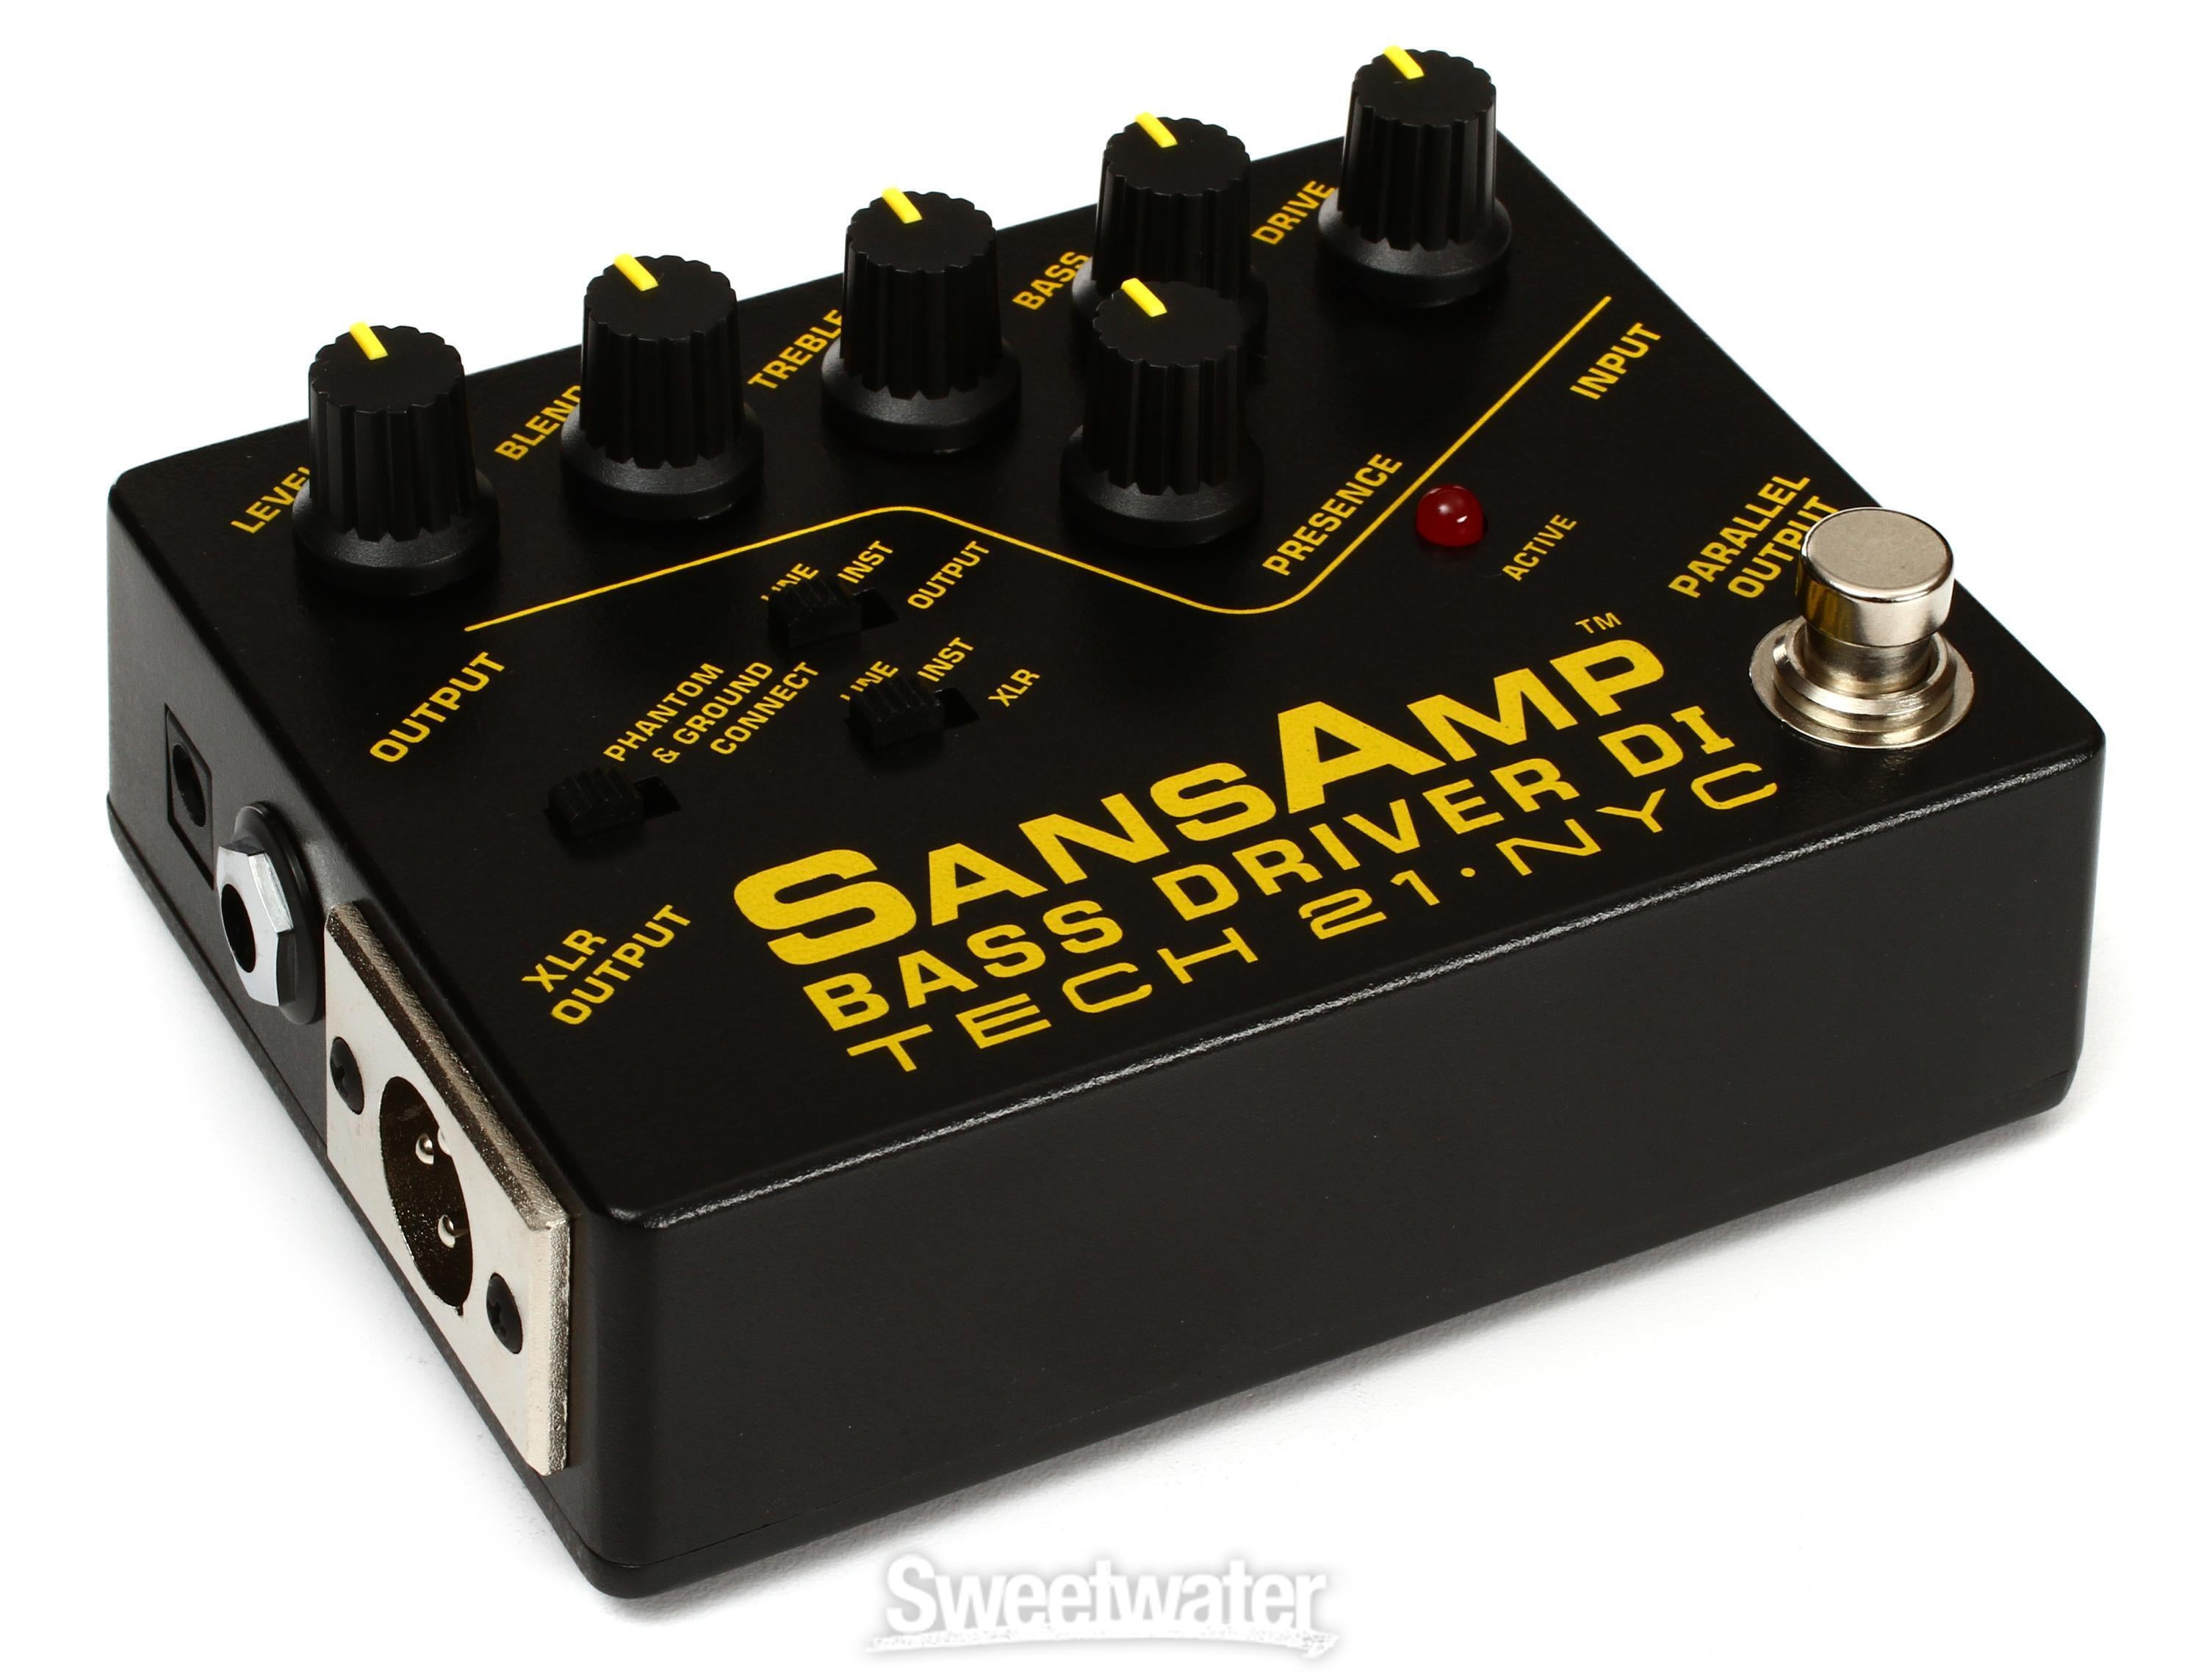 Tech 21 SansAmp Bass Driver Pedal Reviews | Sweetwater